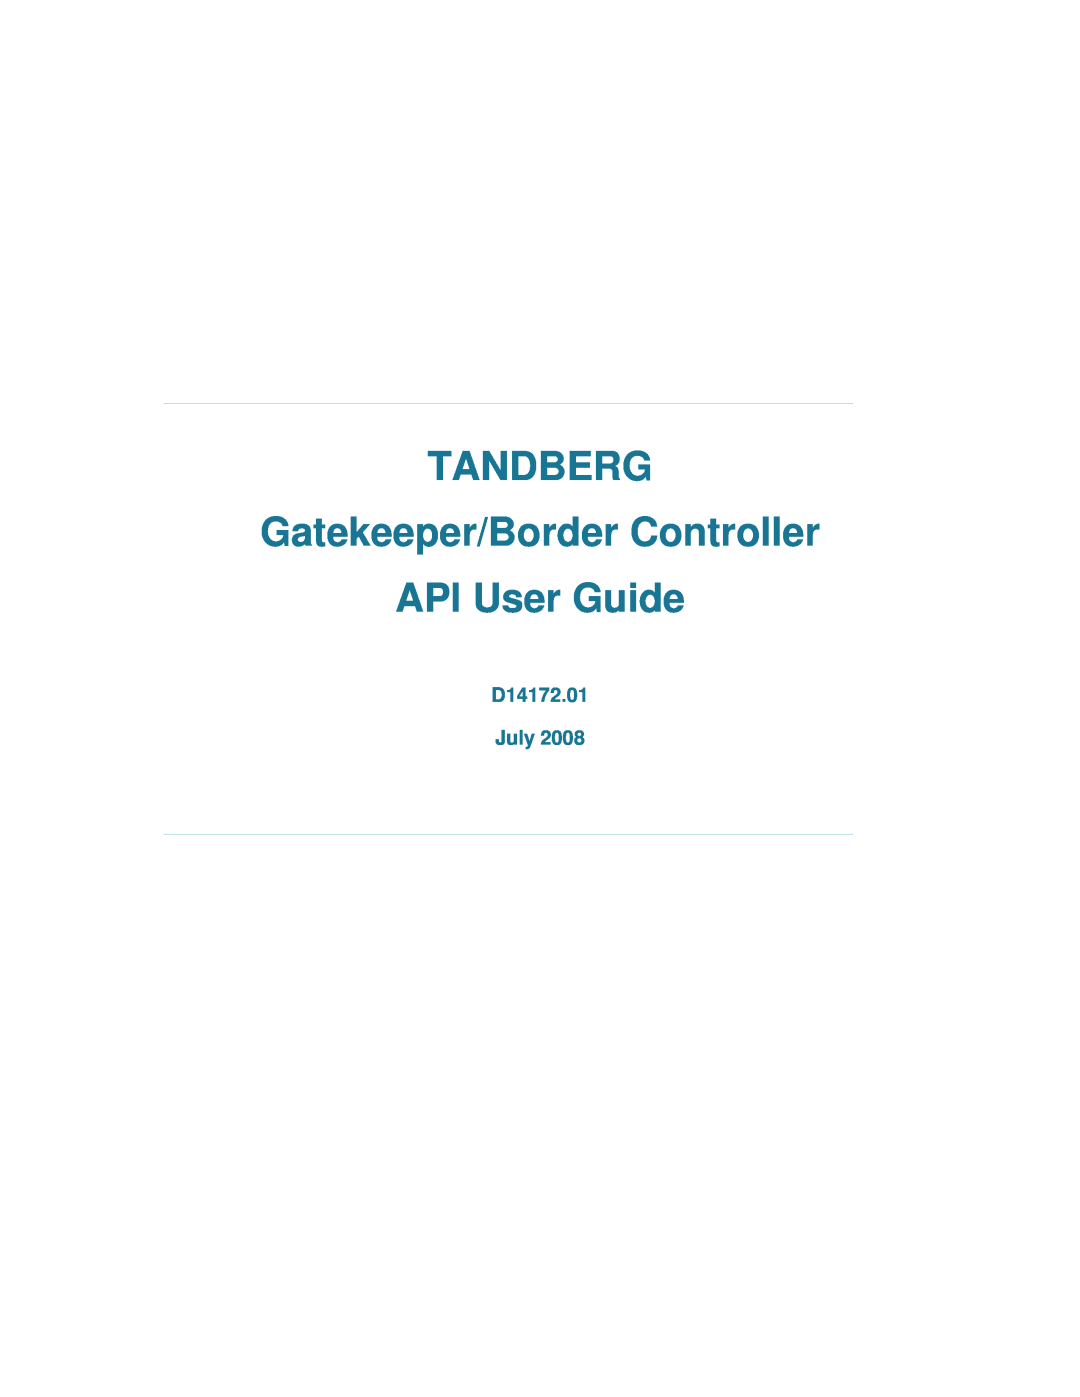 TANDBERG manual TANDBERG Gatekeeper/Border Controller API User Guide, D14172.01 July 